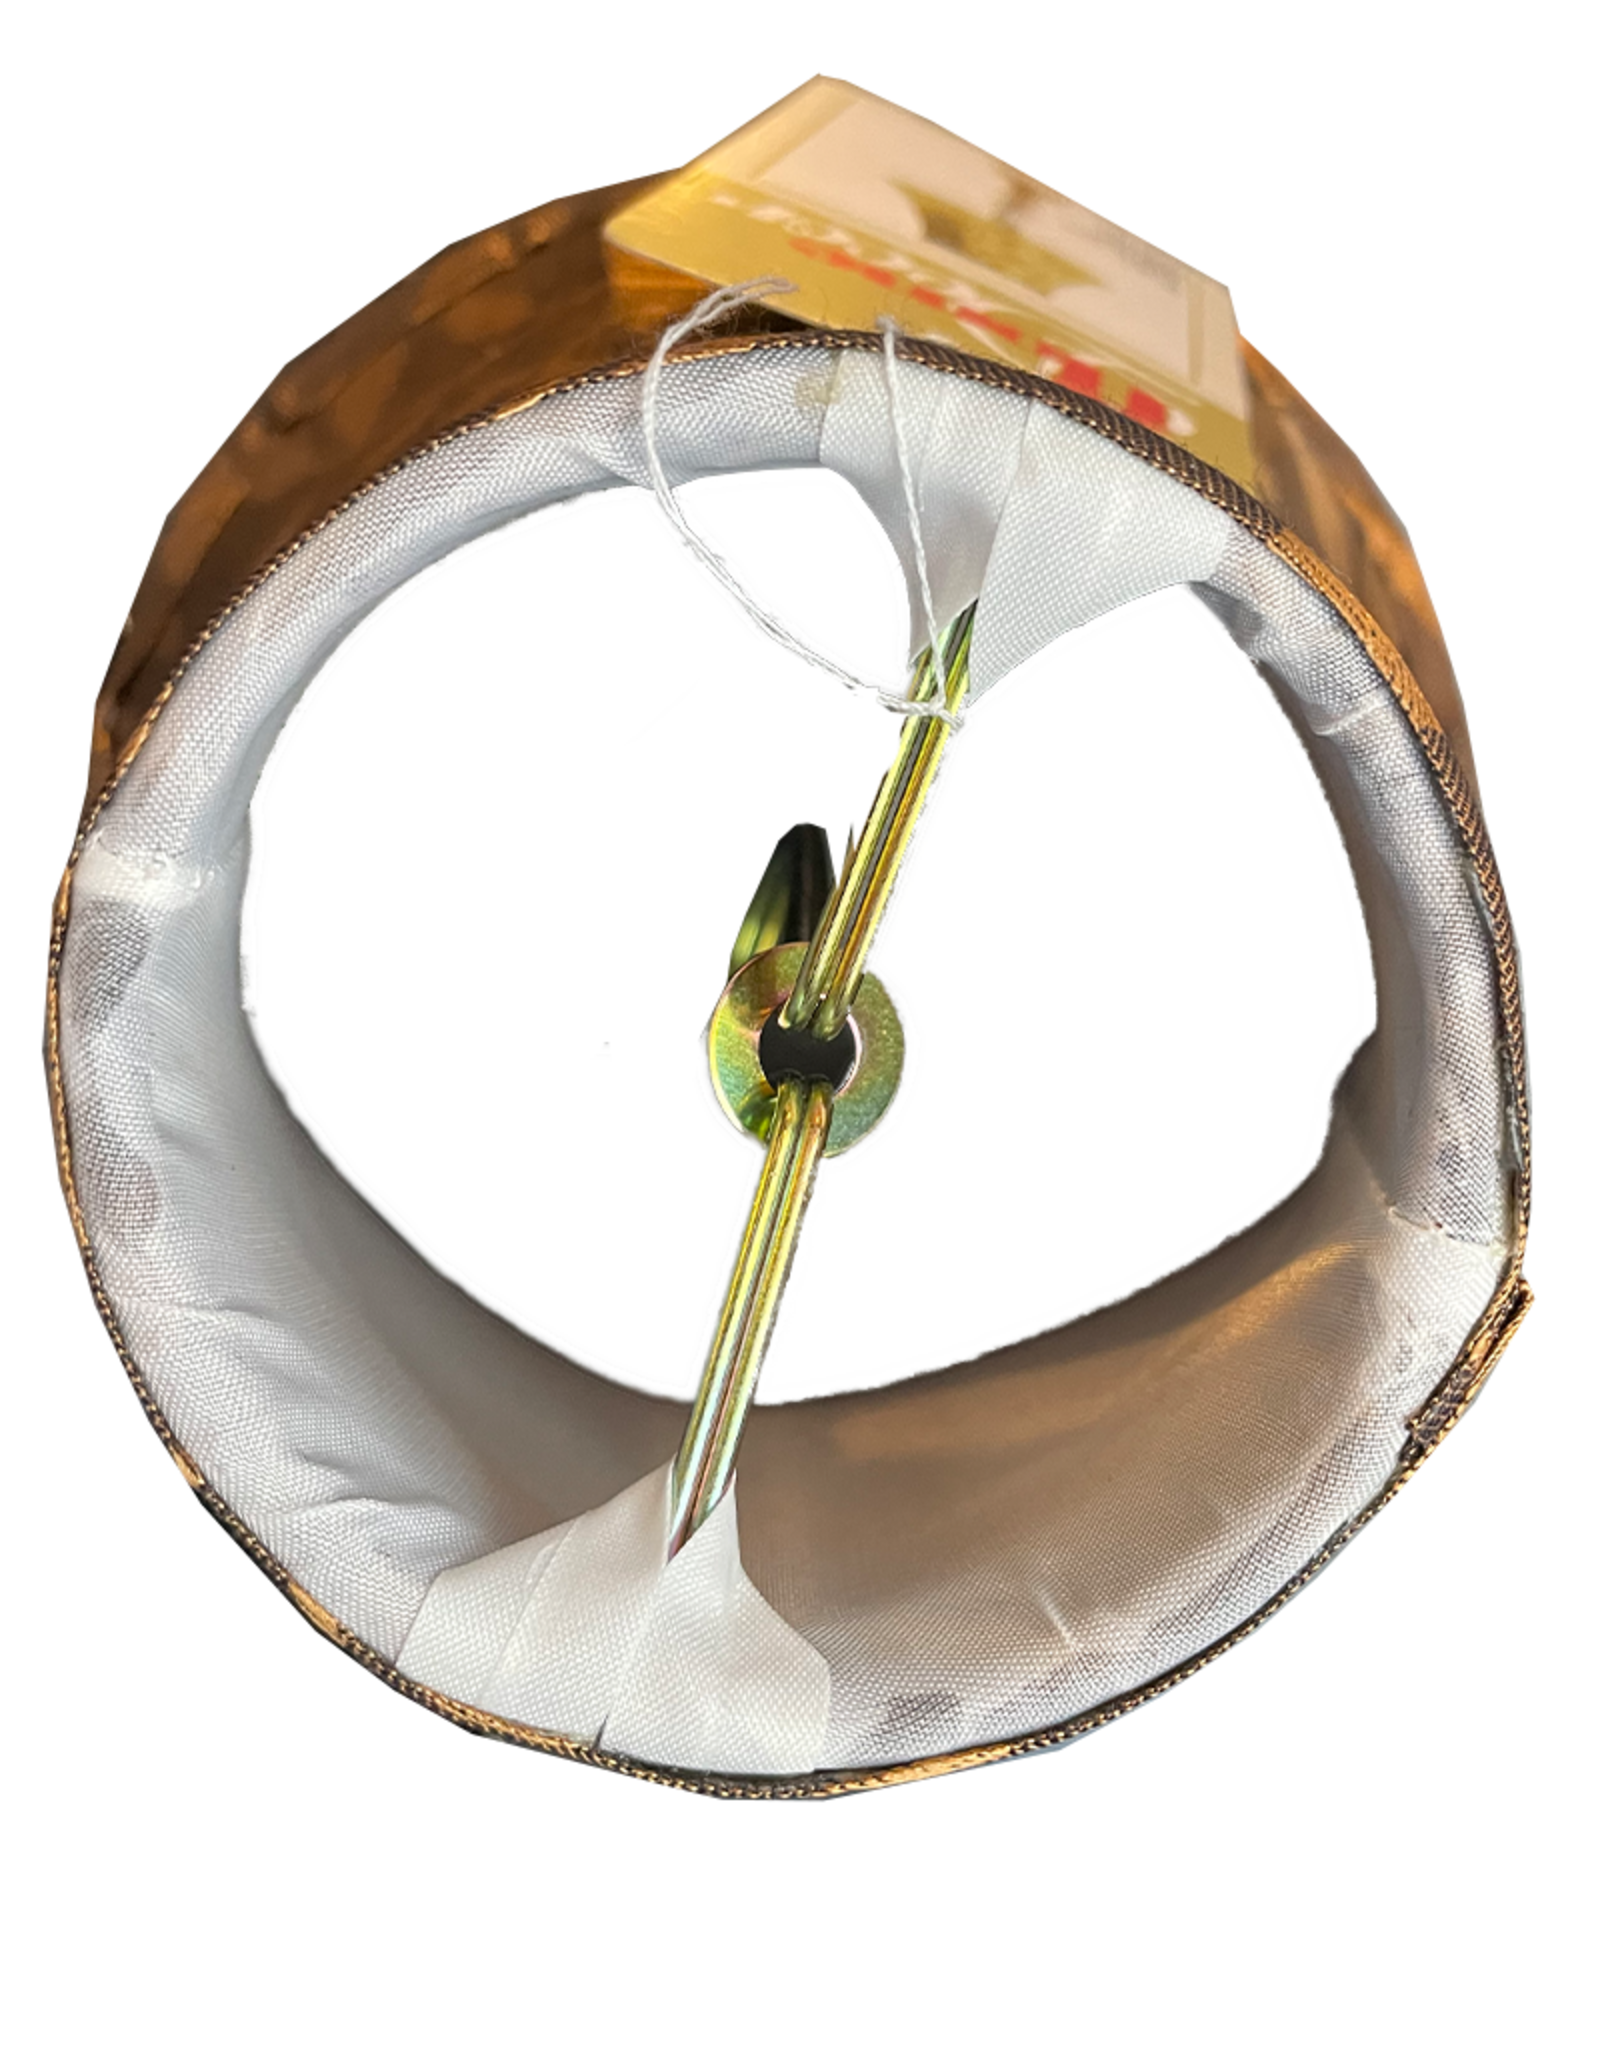 Darice Chandelier Lampshade 5-inch Clips Onto Light Bulb w Leaf Desig